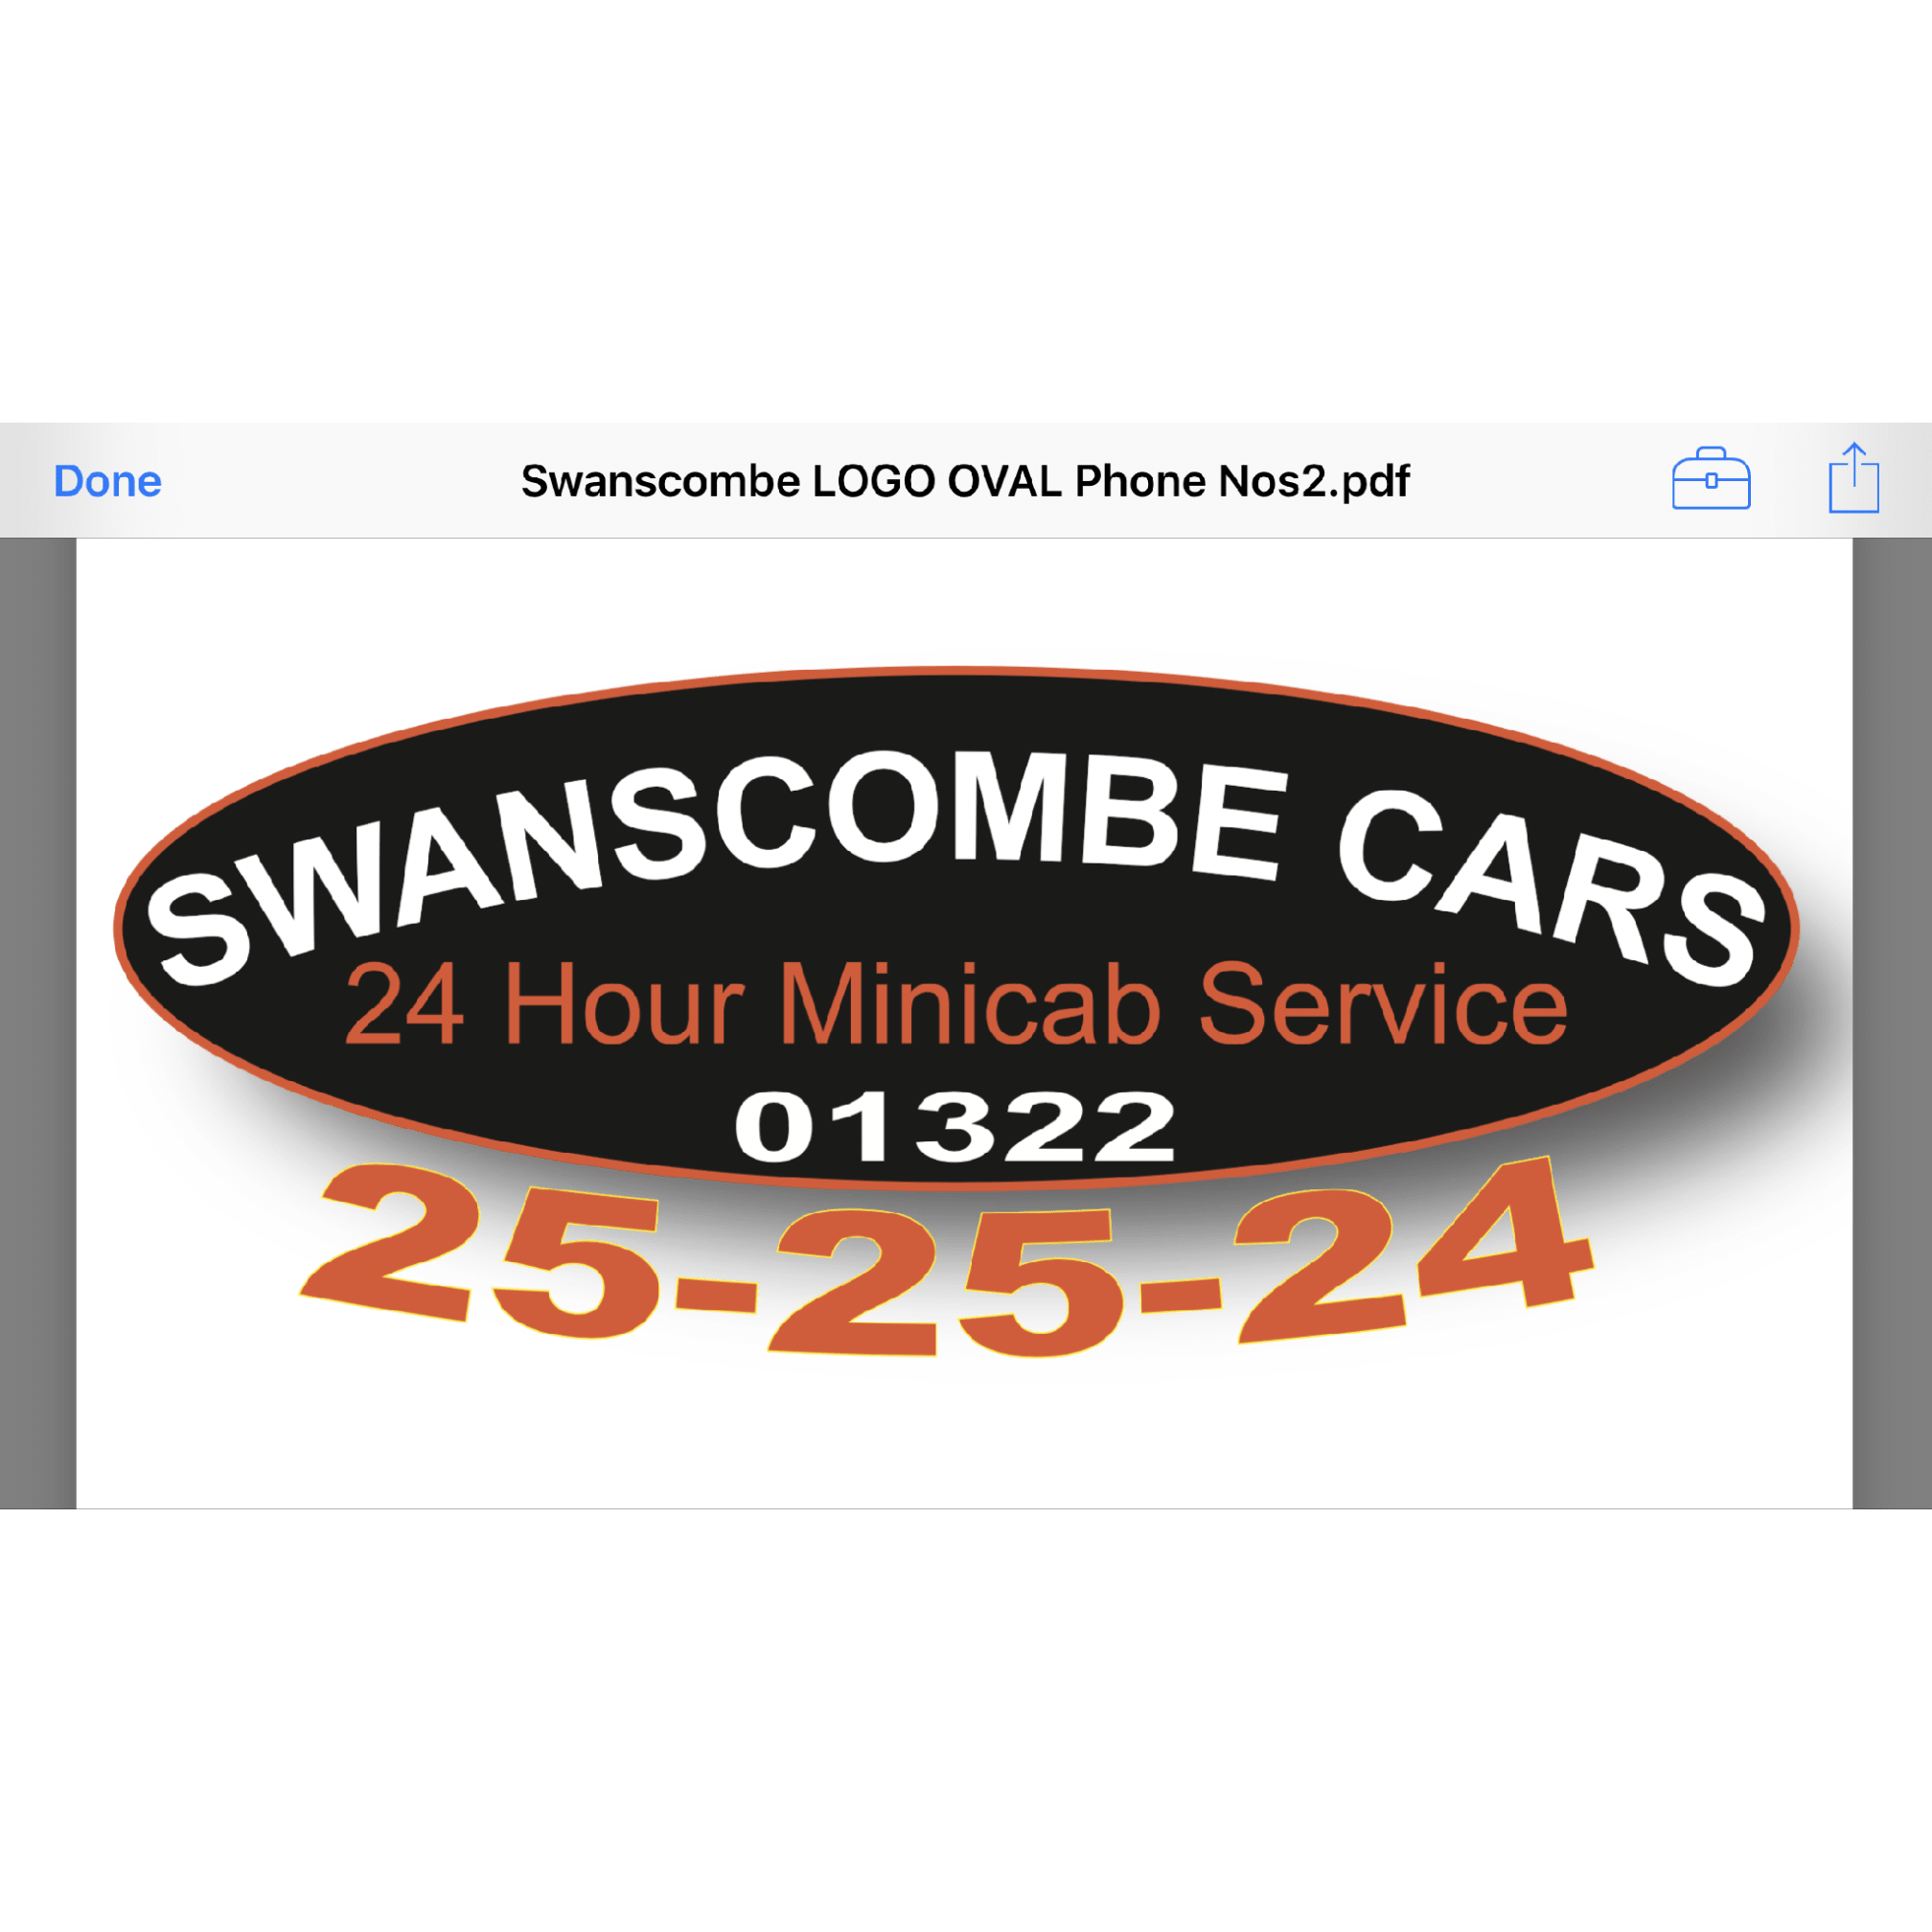 LOGO Swanscombe Cars Dartford 01474 776655